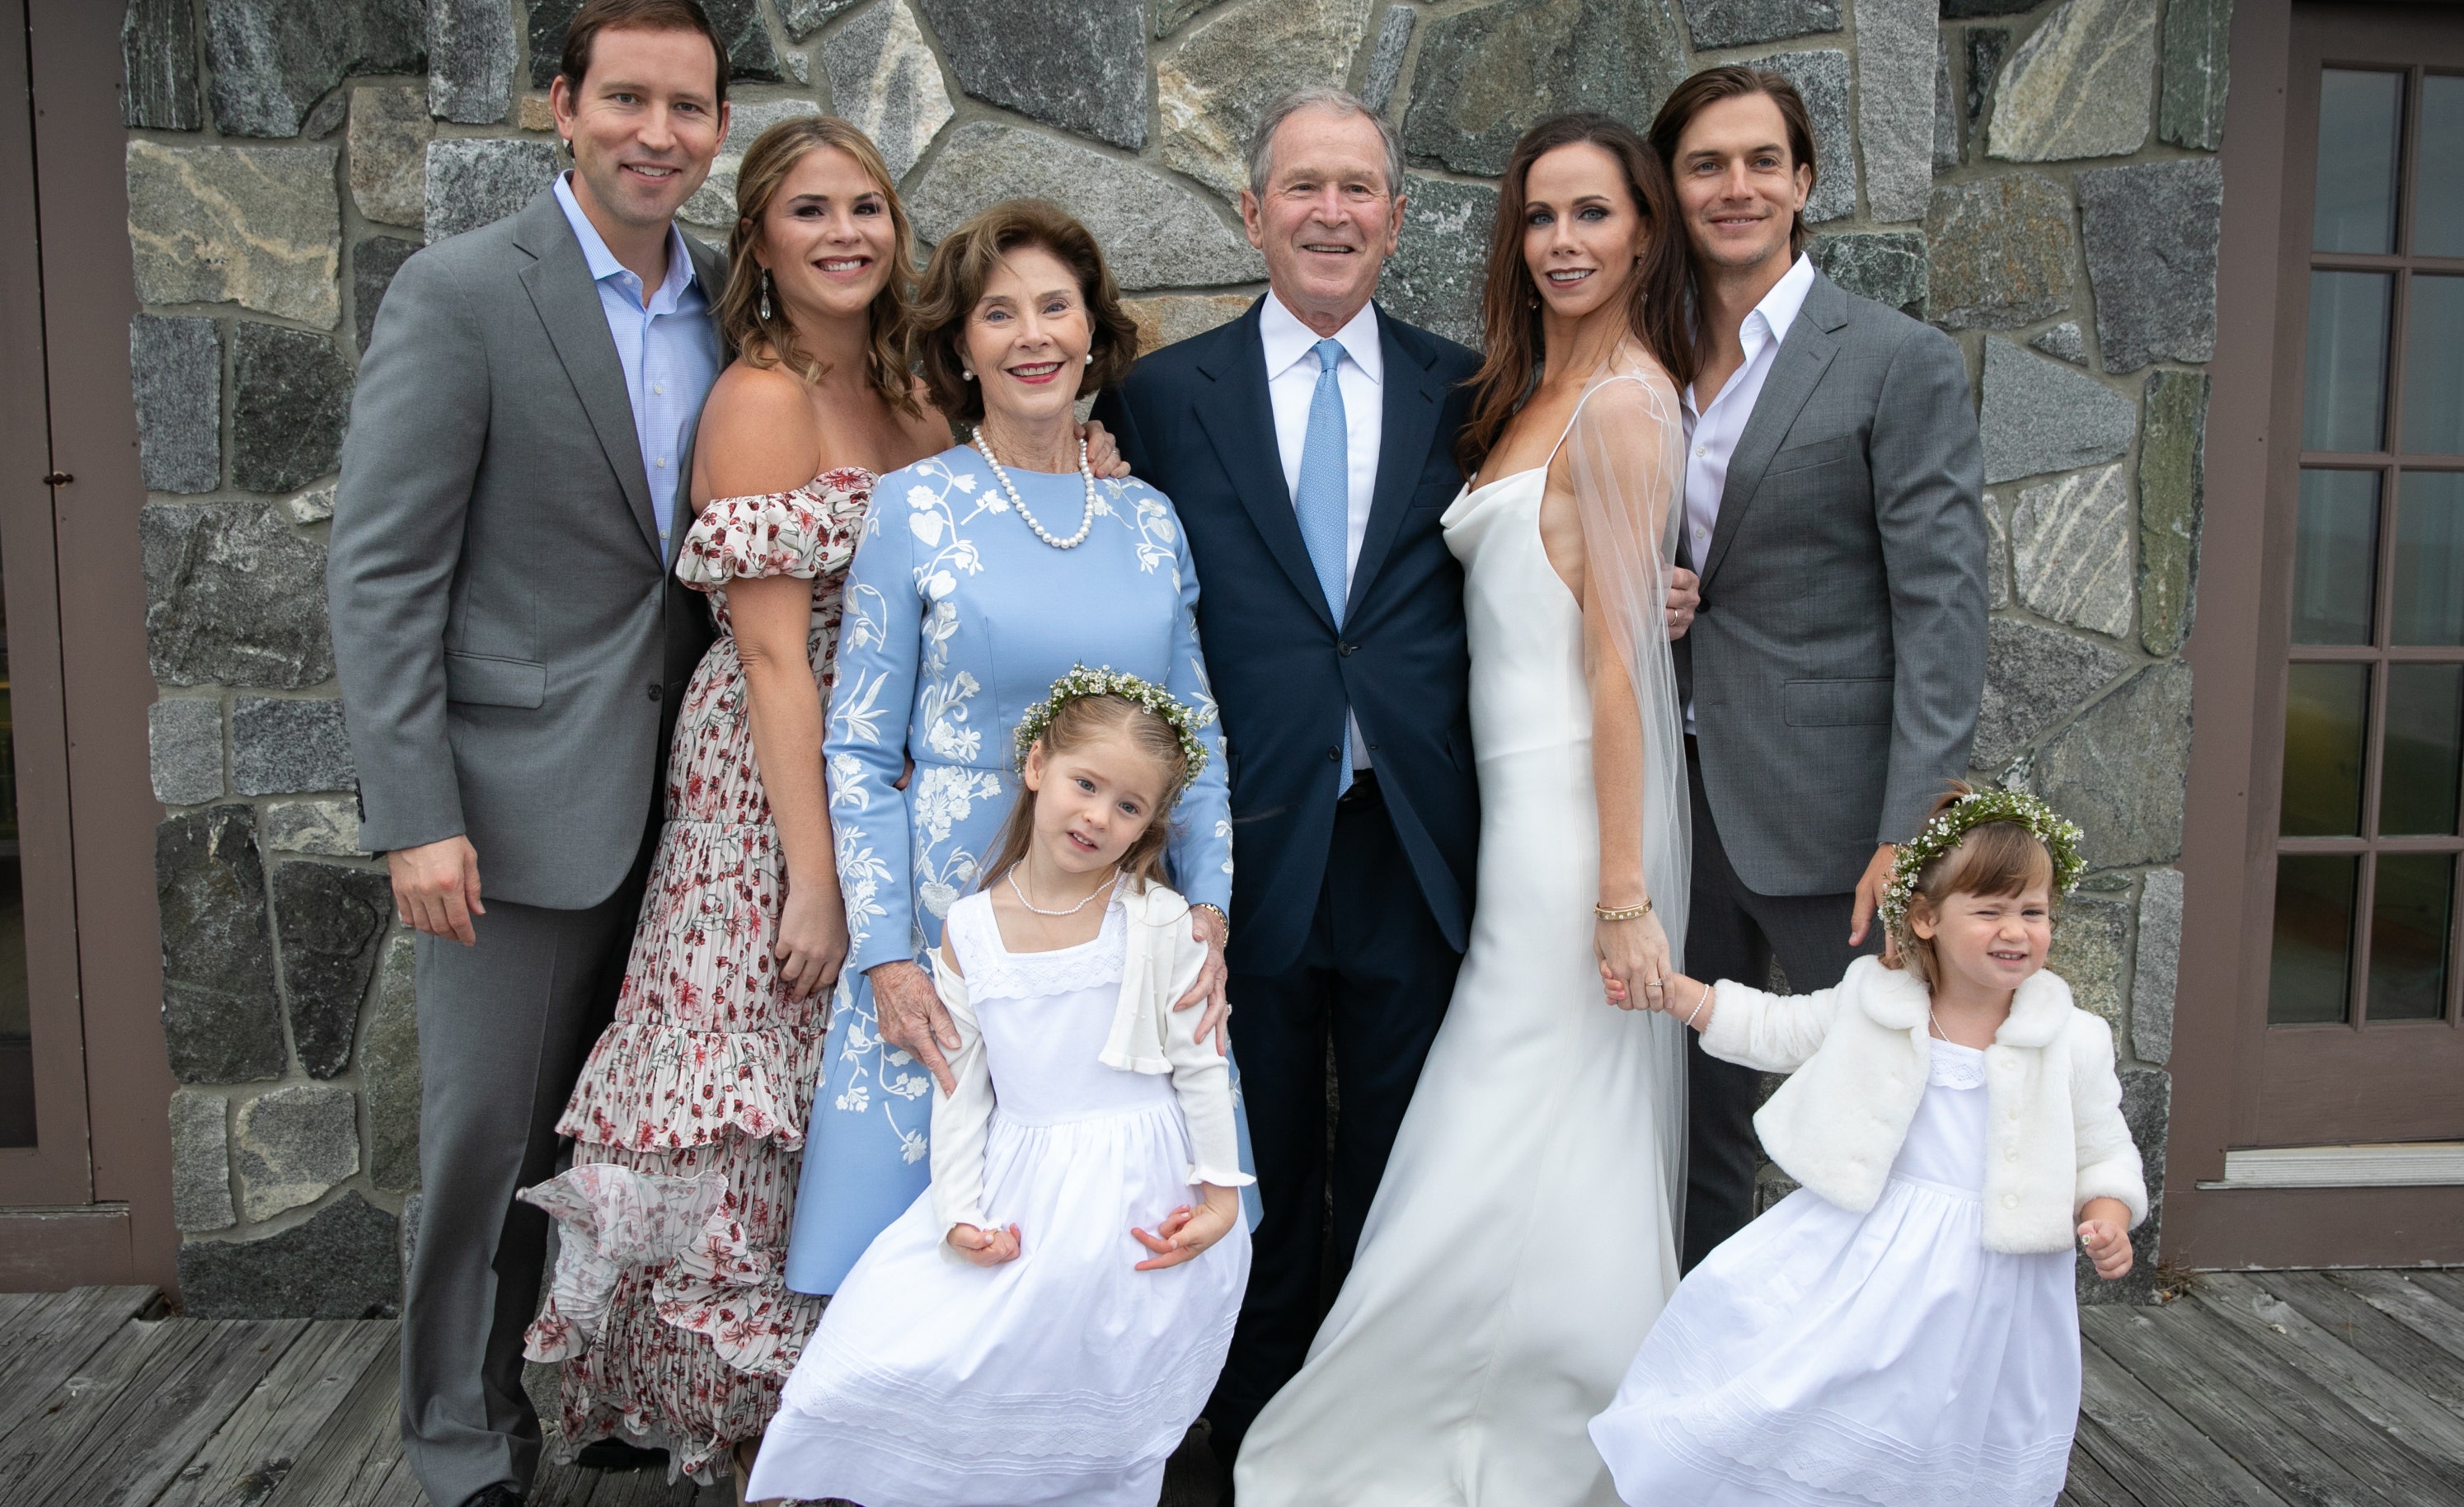 Jenna Bush Hager is sharing more photos from Barbara Bush’s wedding weekend...